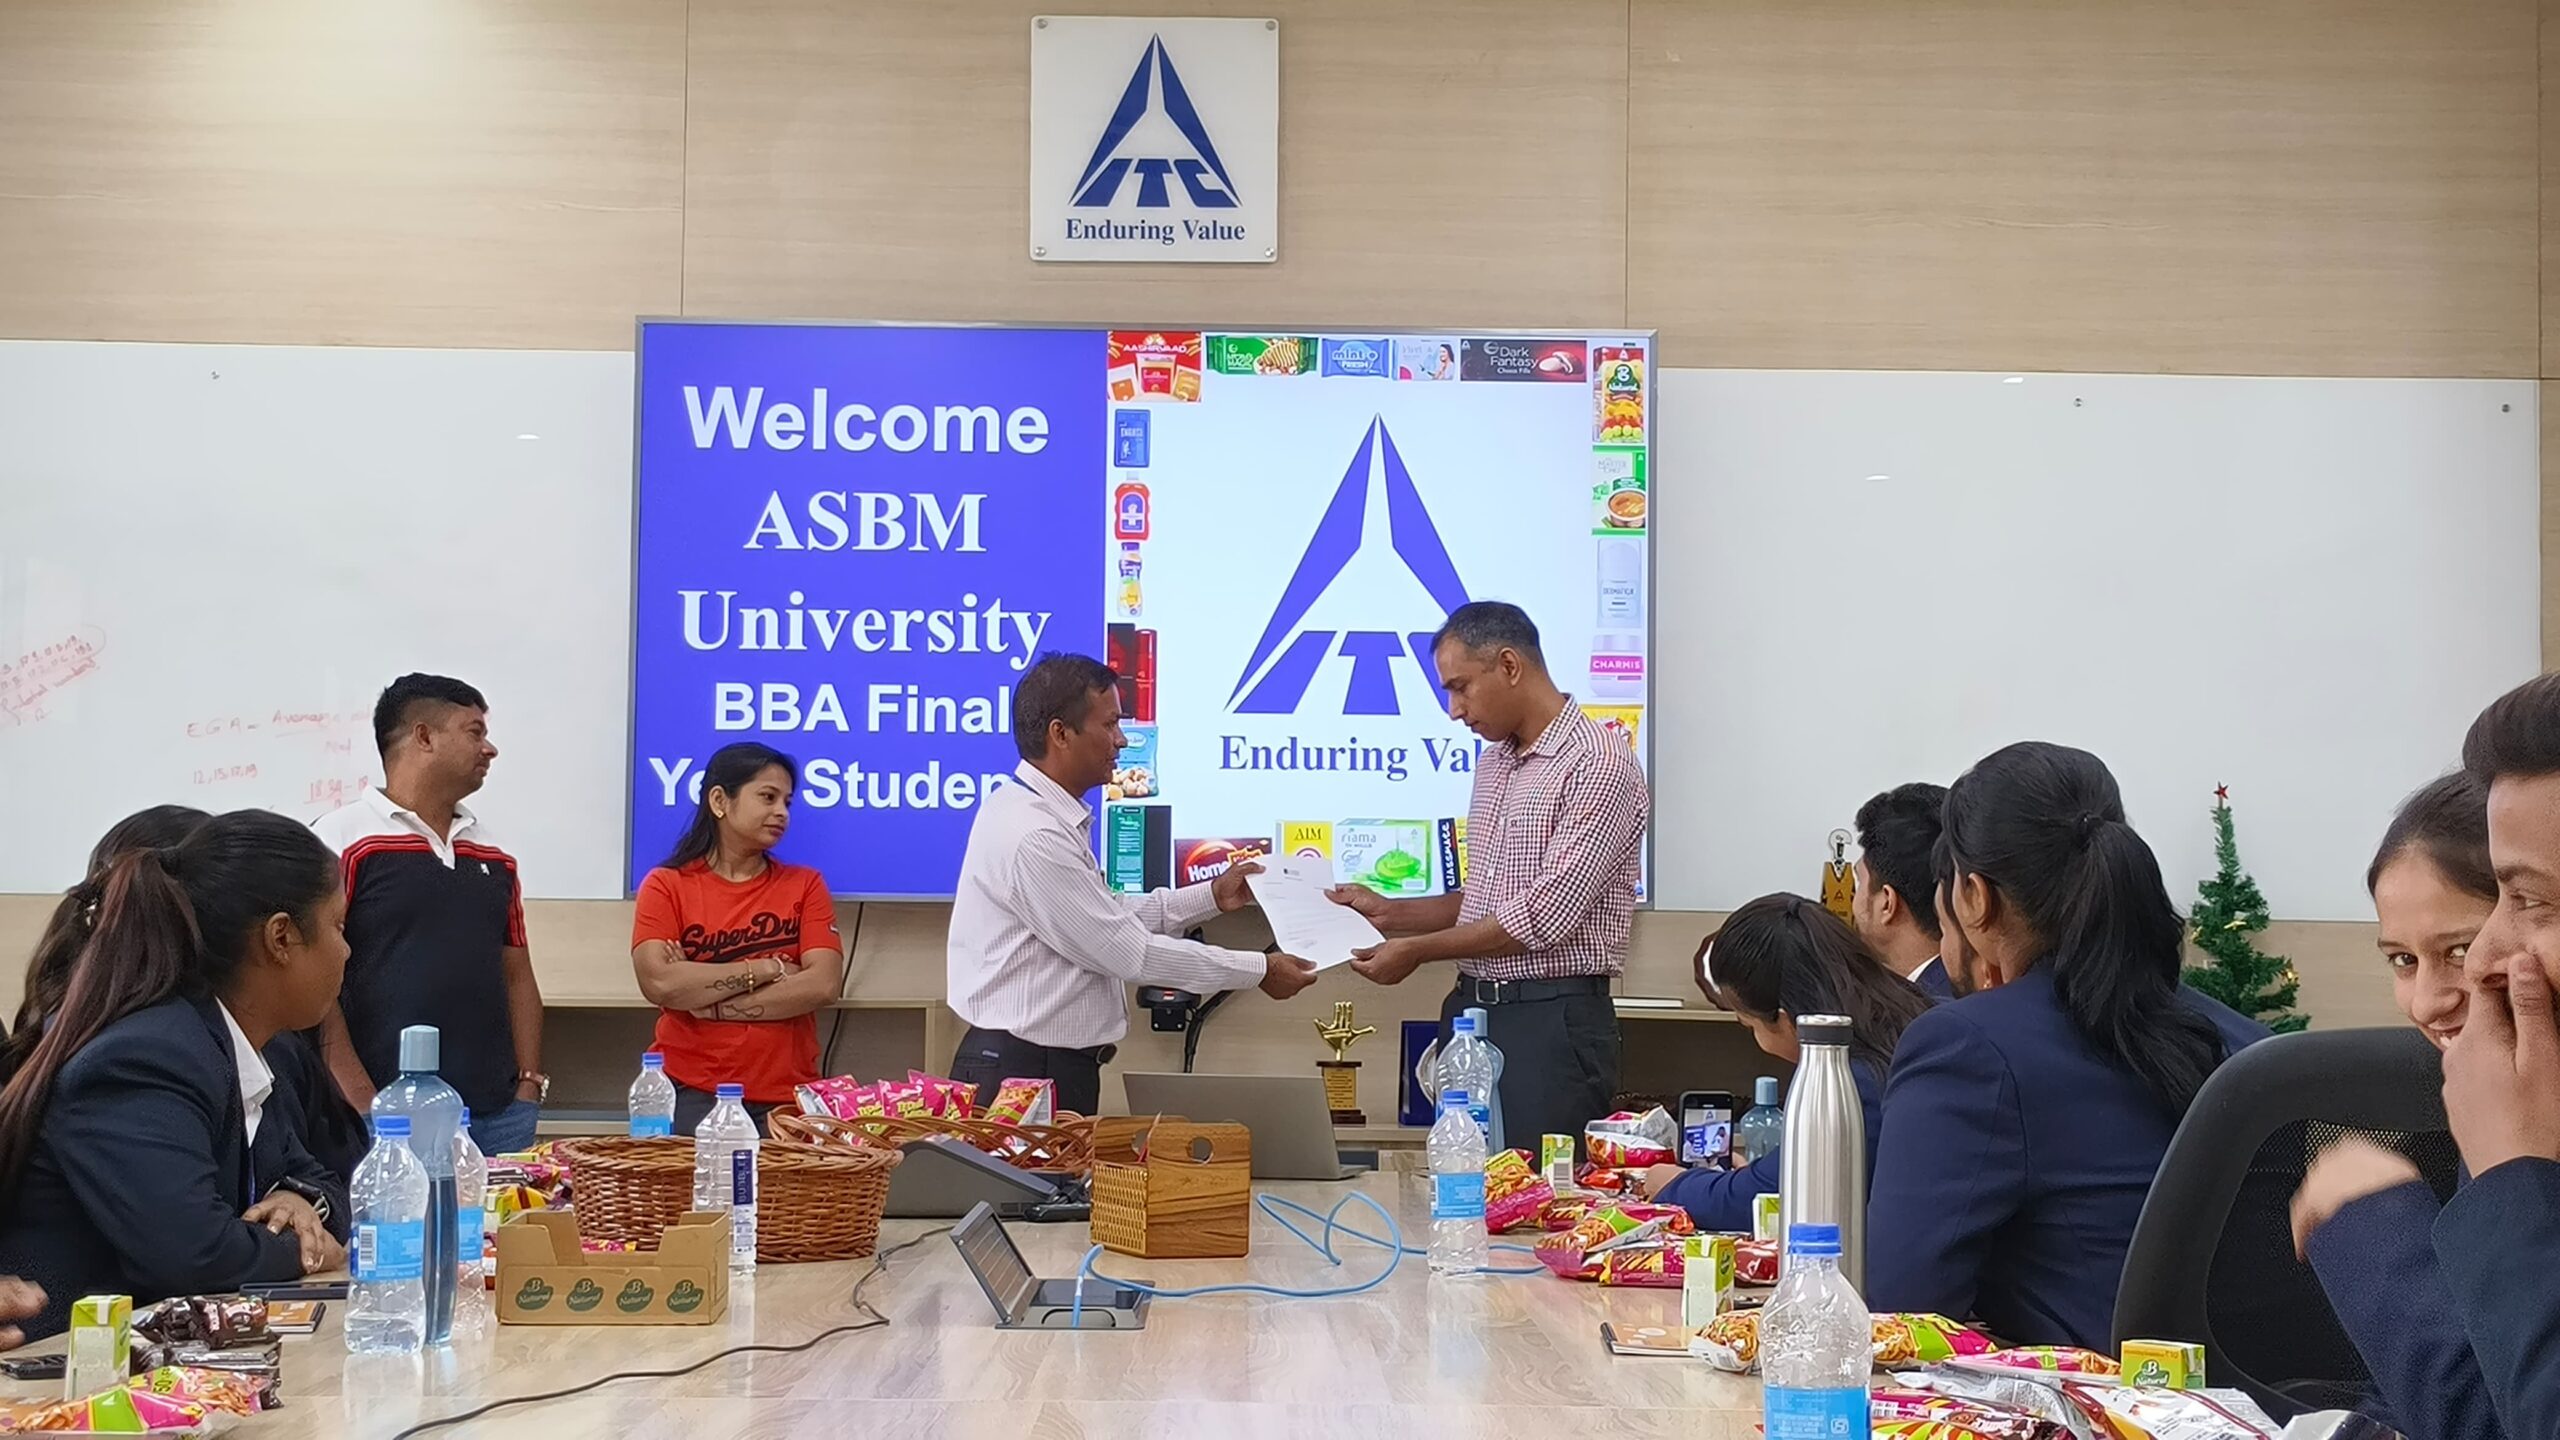 Professor Pratap Pati from ASBM University presented a token of appreciation to Mr. Pratyush Kumar Nayak in recognition of ITC's hospitality